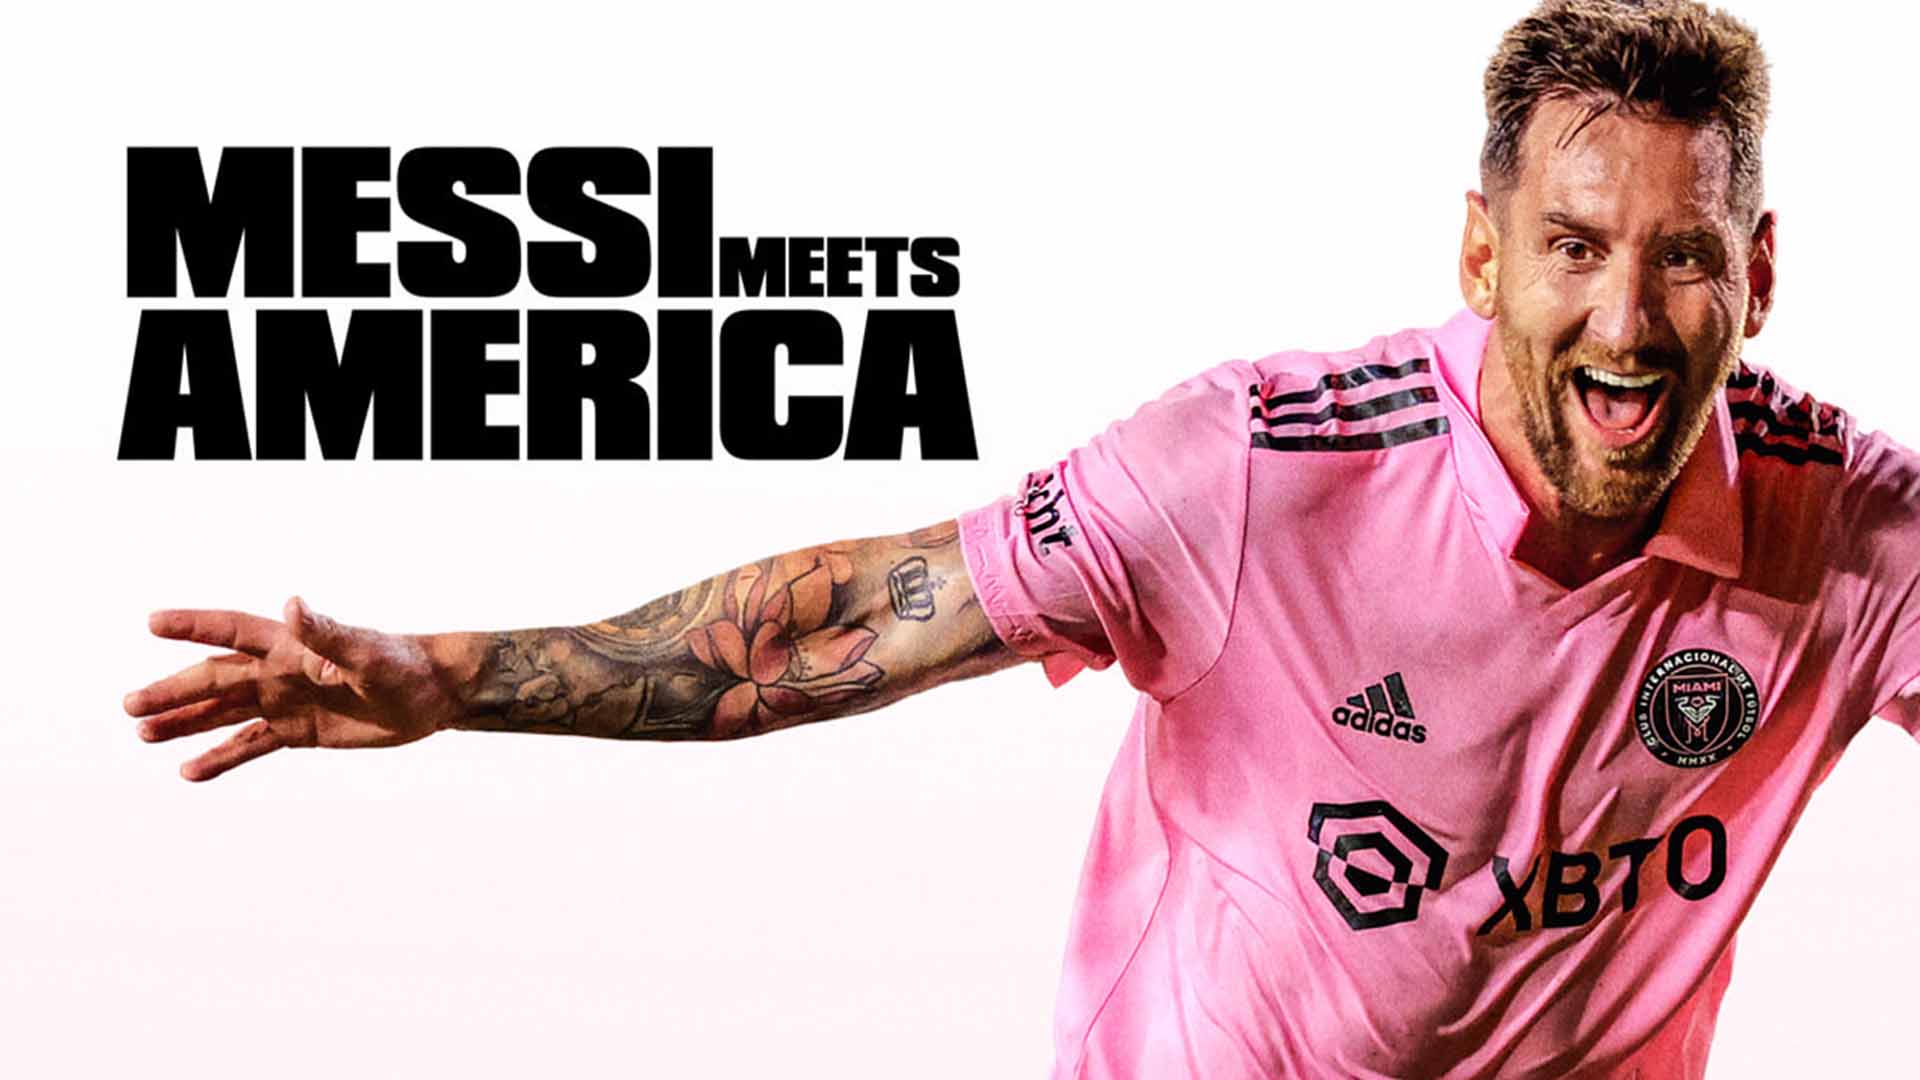 Apple TV+ "Messi Meets America" 6 Episode Documentary Series